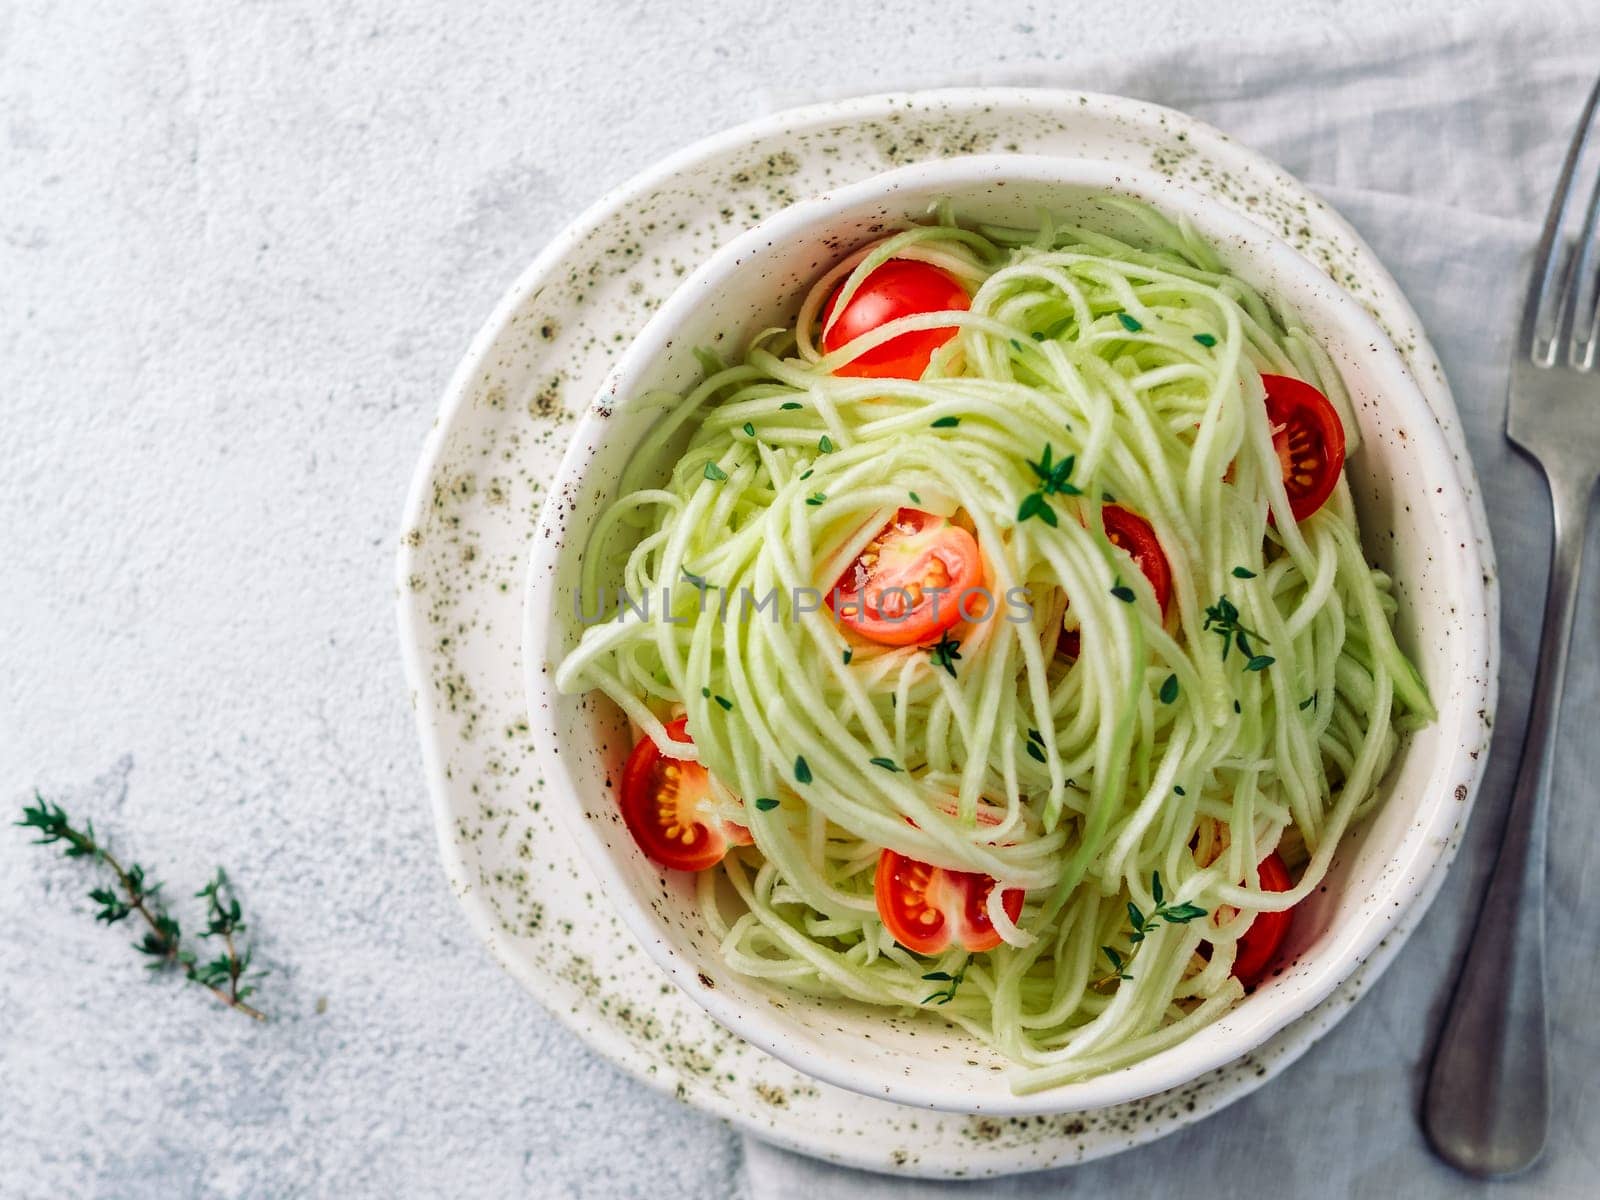 Zucchini noodles salad. Top view, copy space by fascinadora